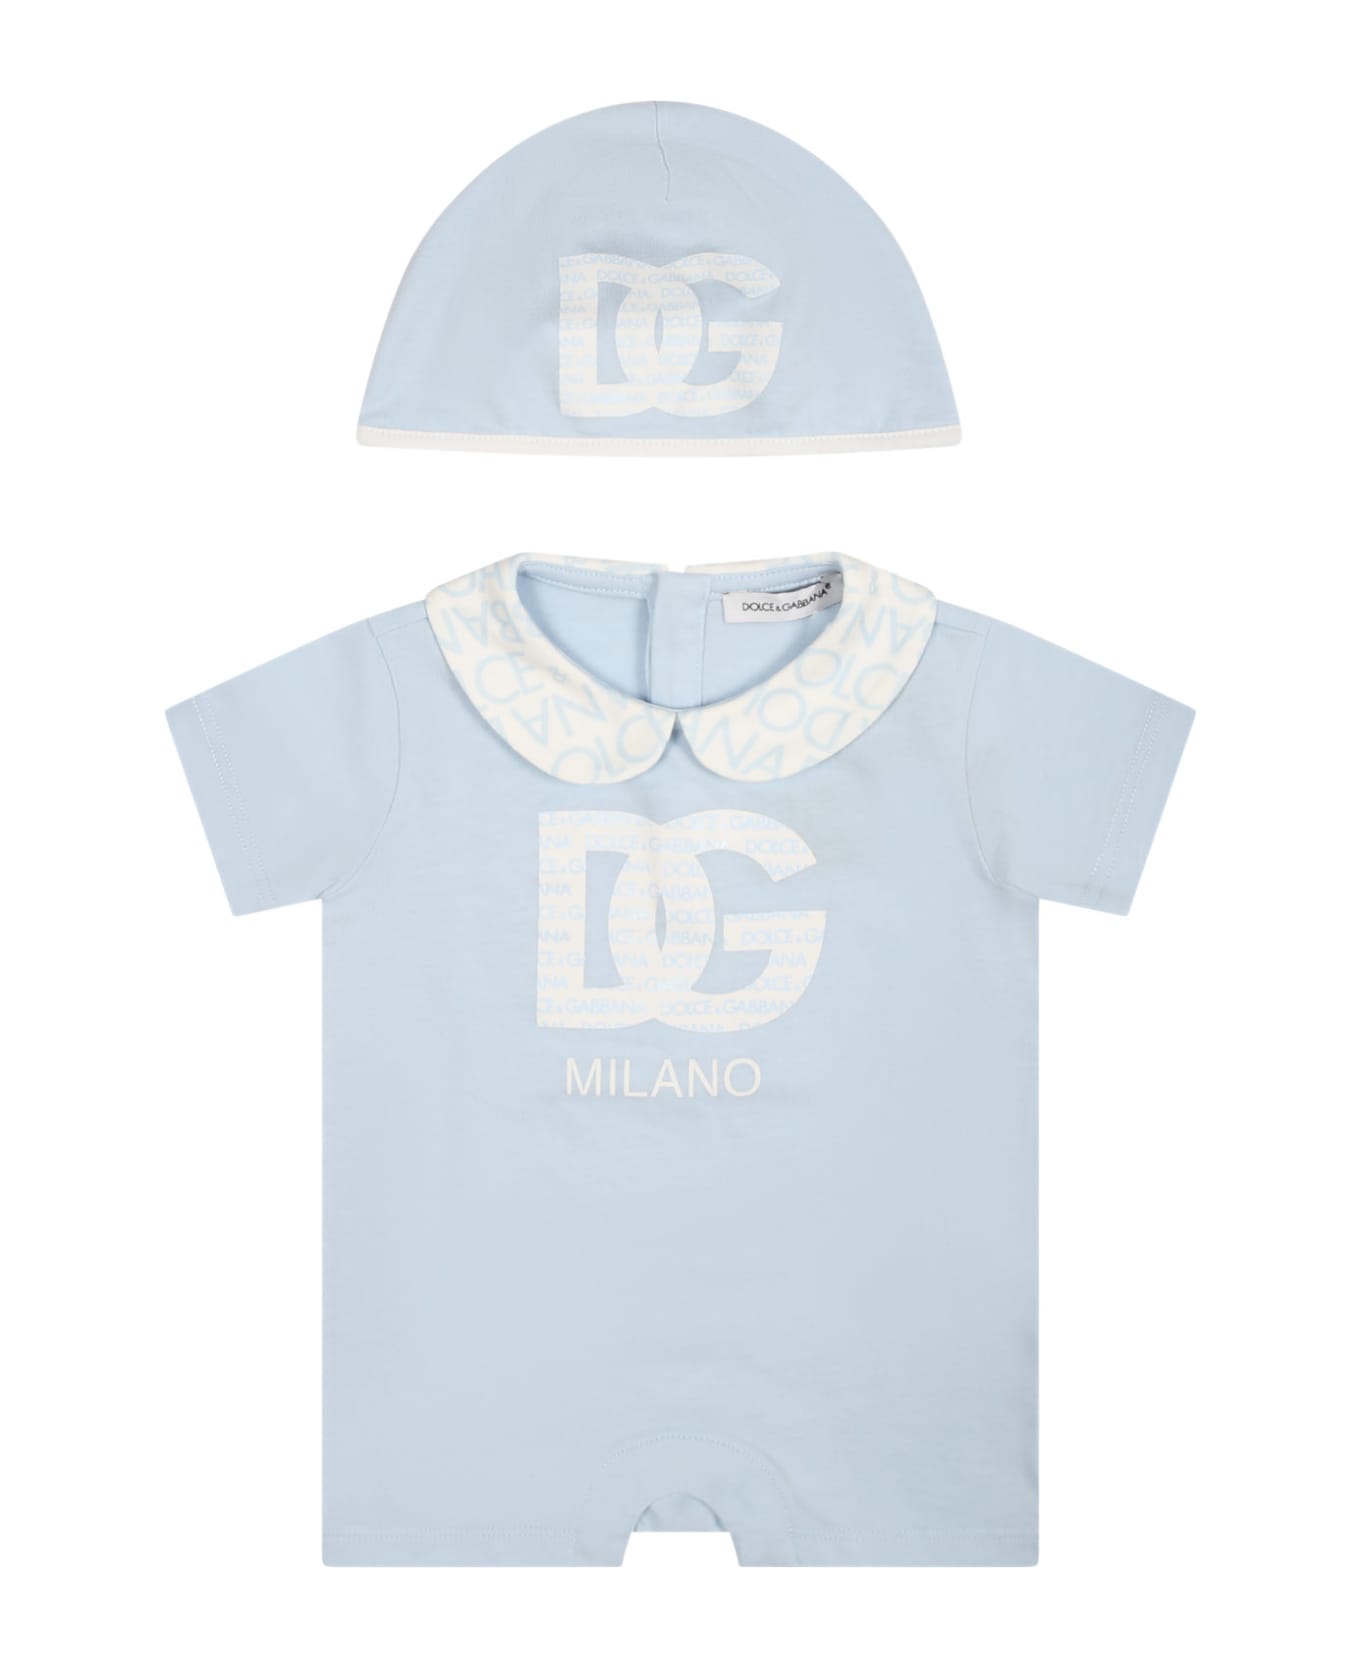 Dolce & Gabbana Light Blue Romper Suit For Baby Boy With Logo - Celeste